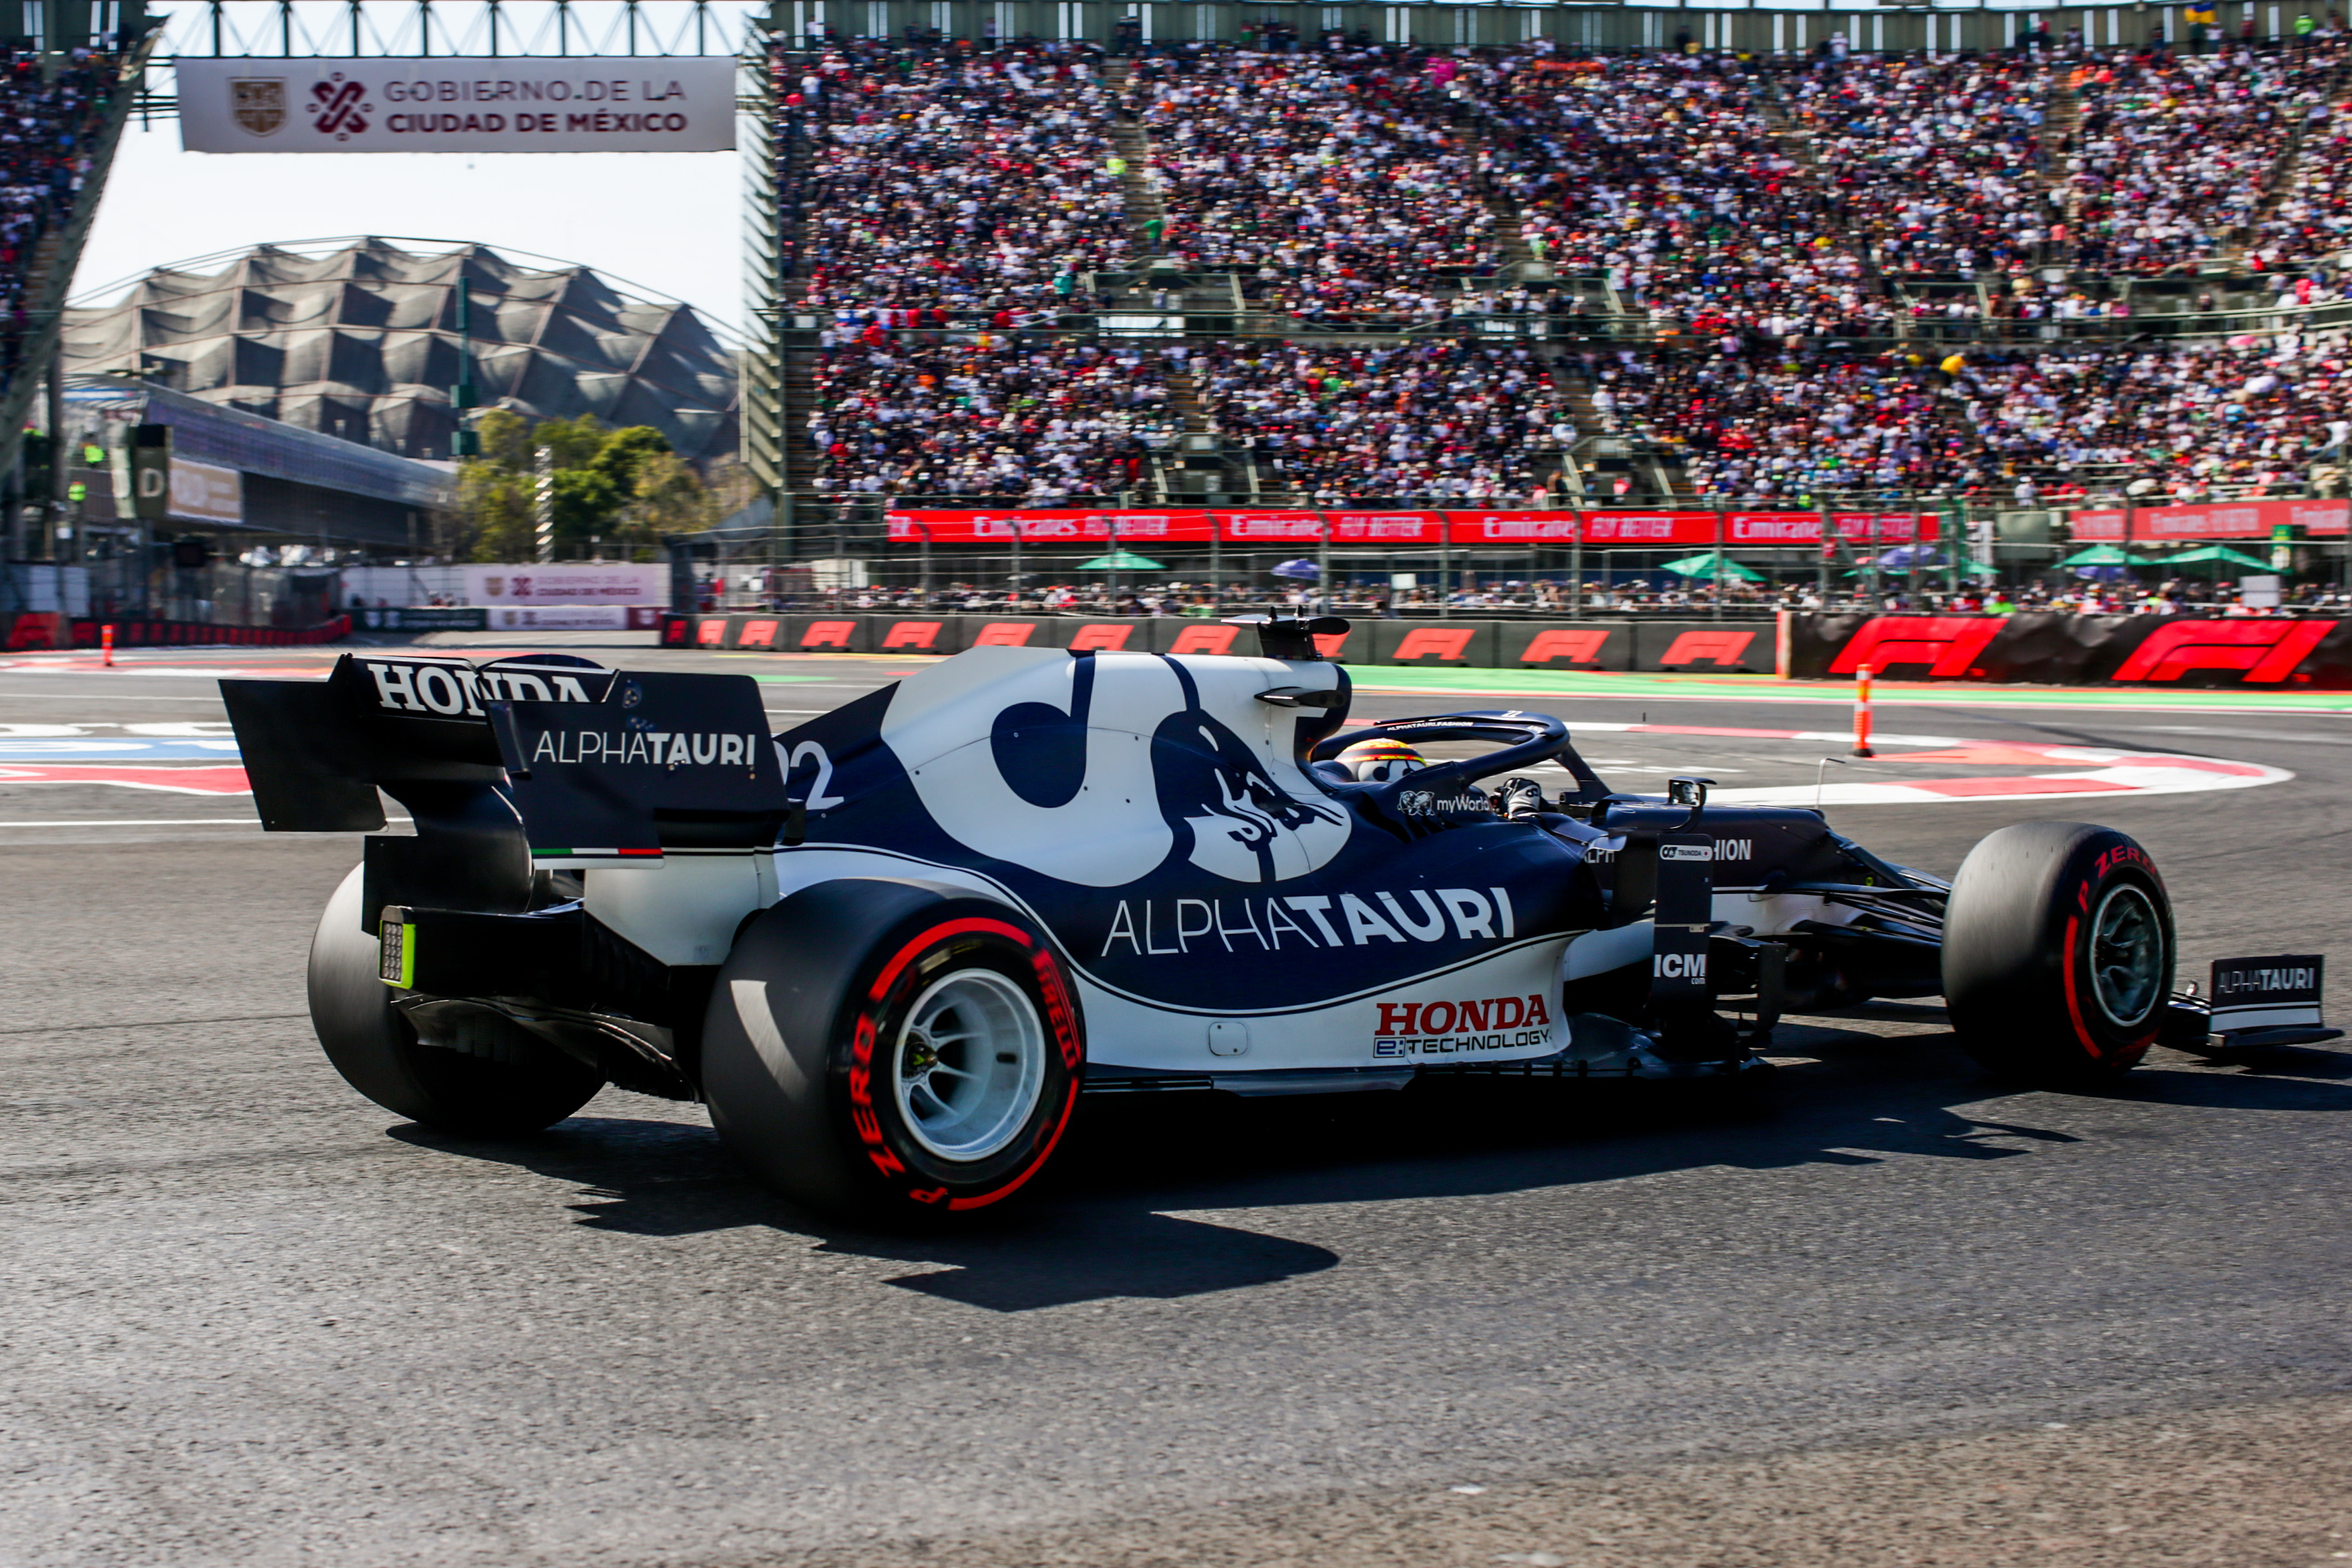 F1 Grand Prix Of Mexico Qualifying